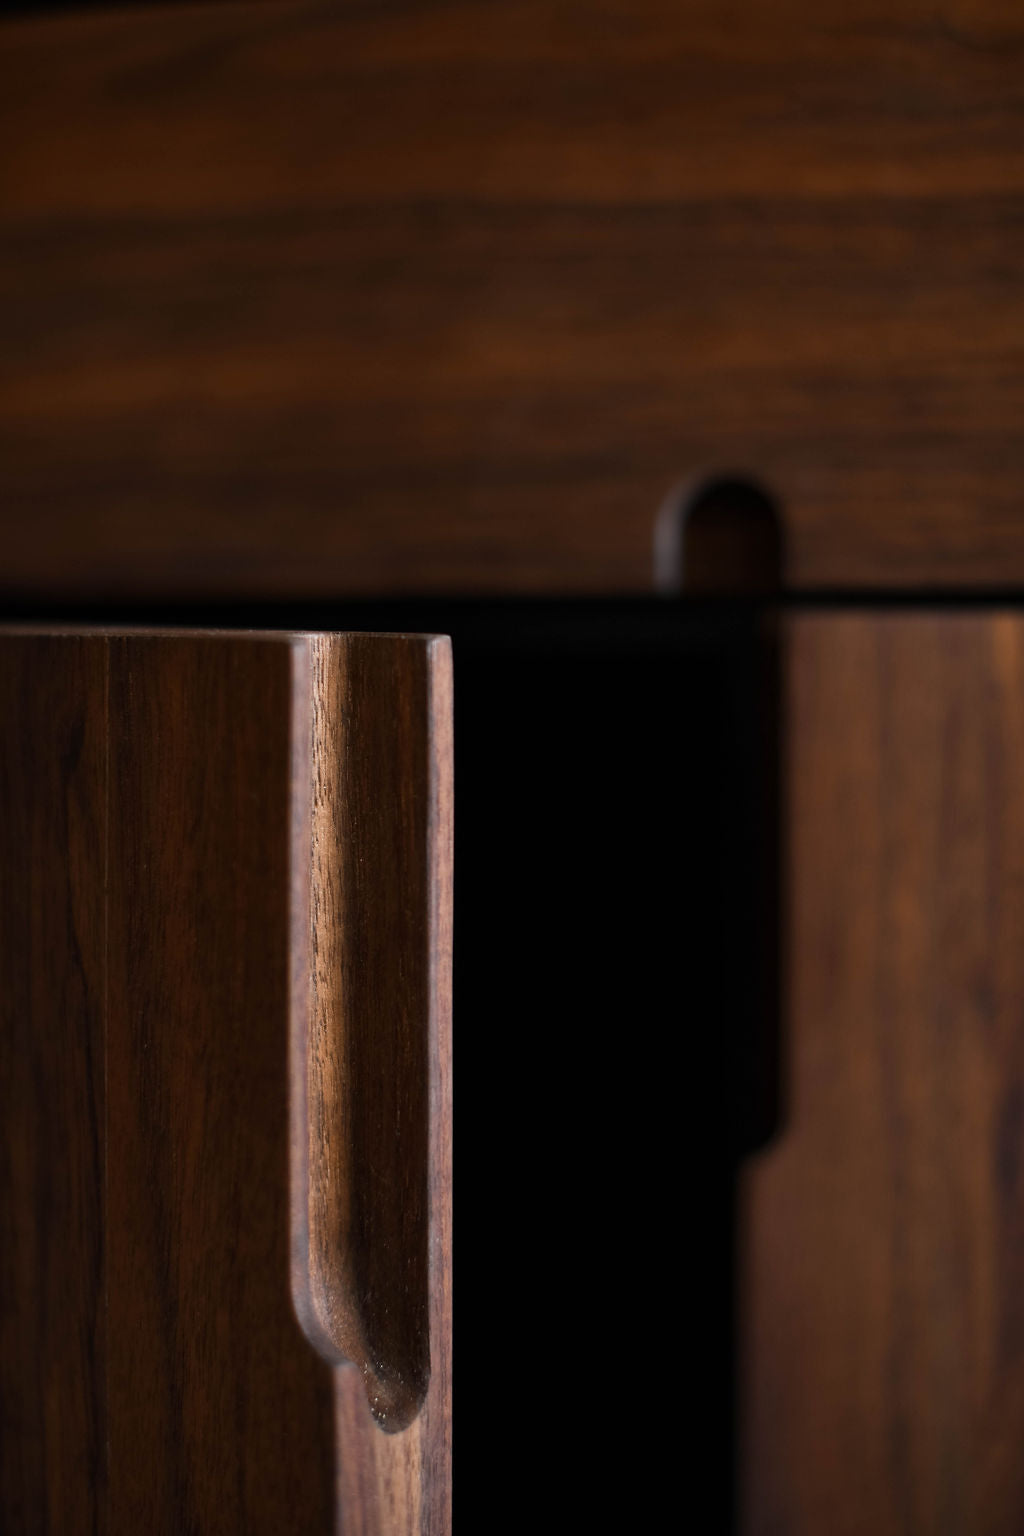 Kings nightstand - steel casing with wood door and drawer